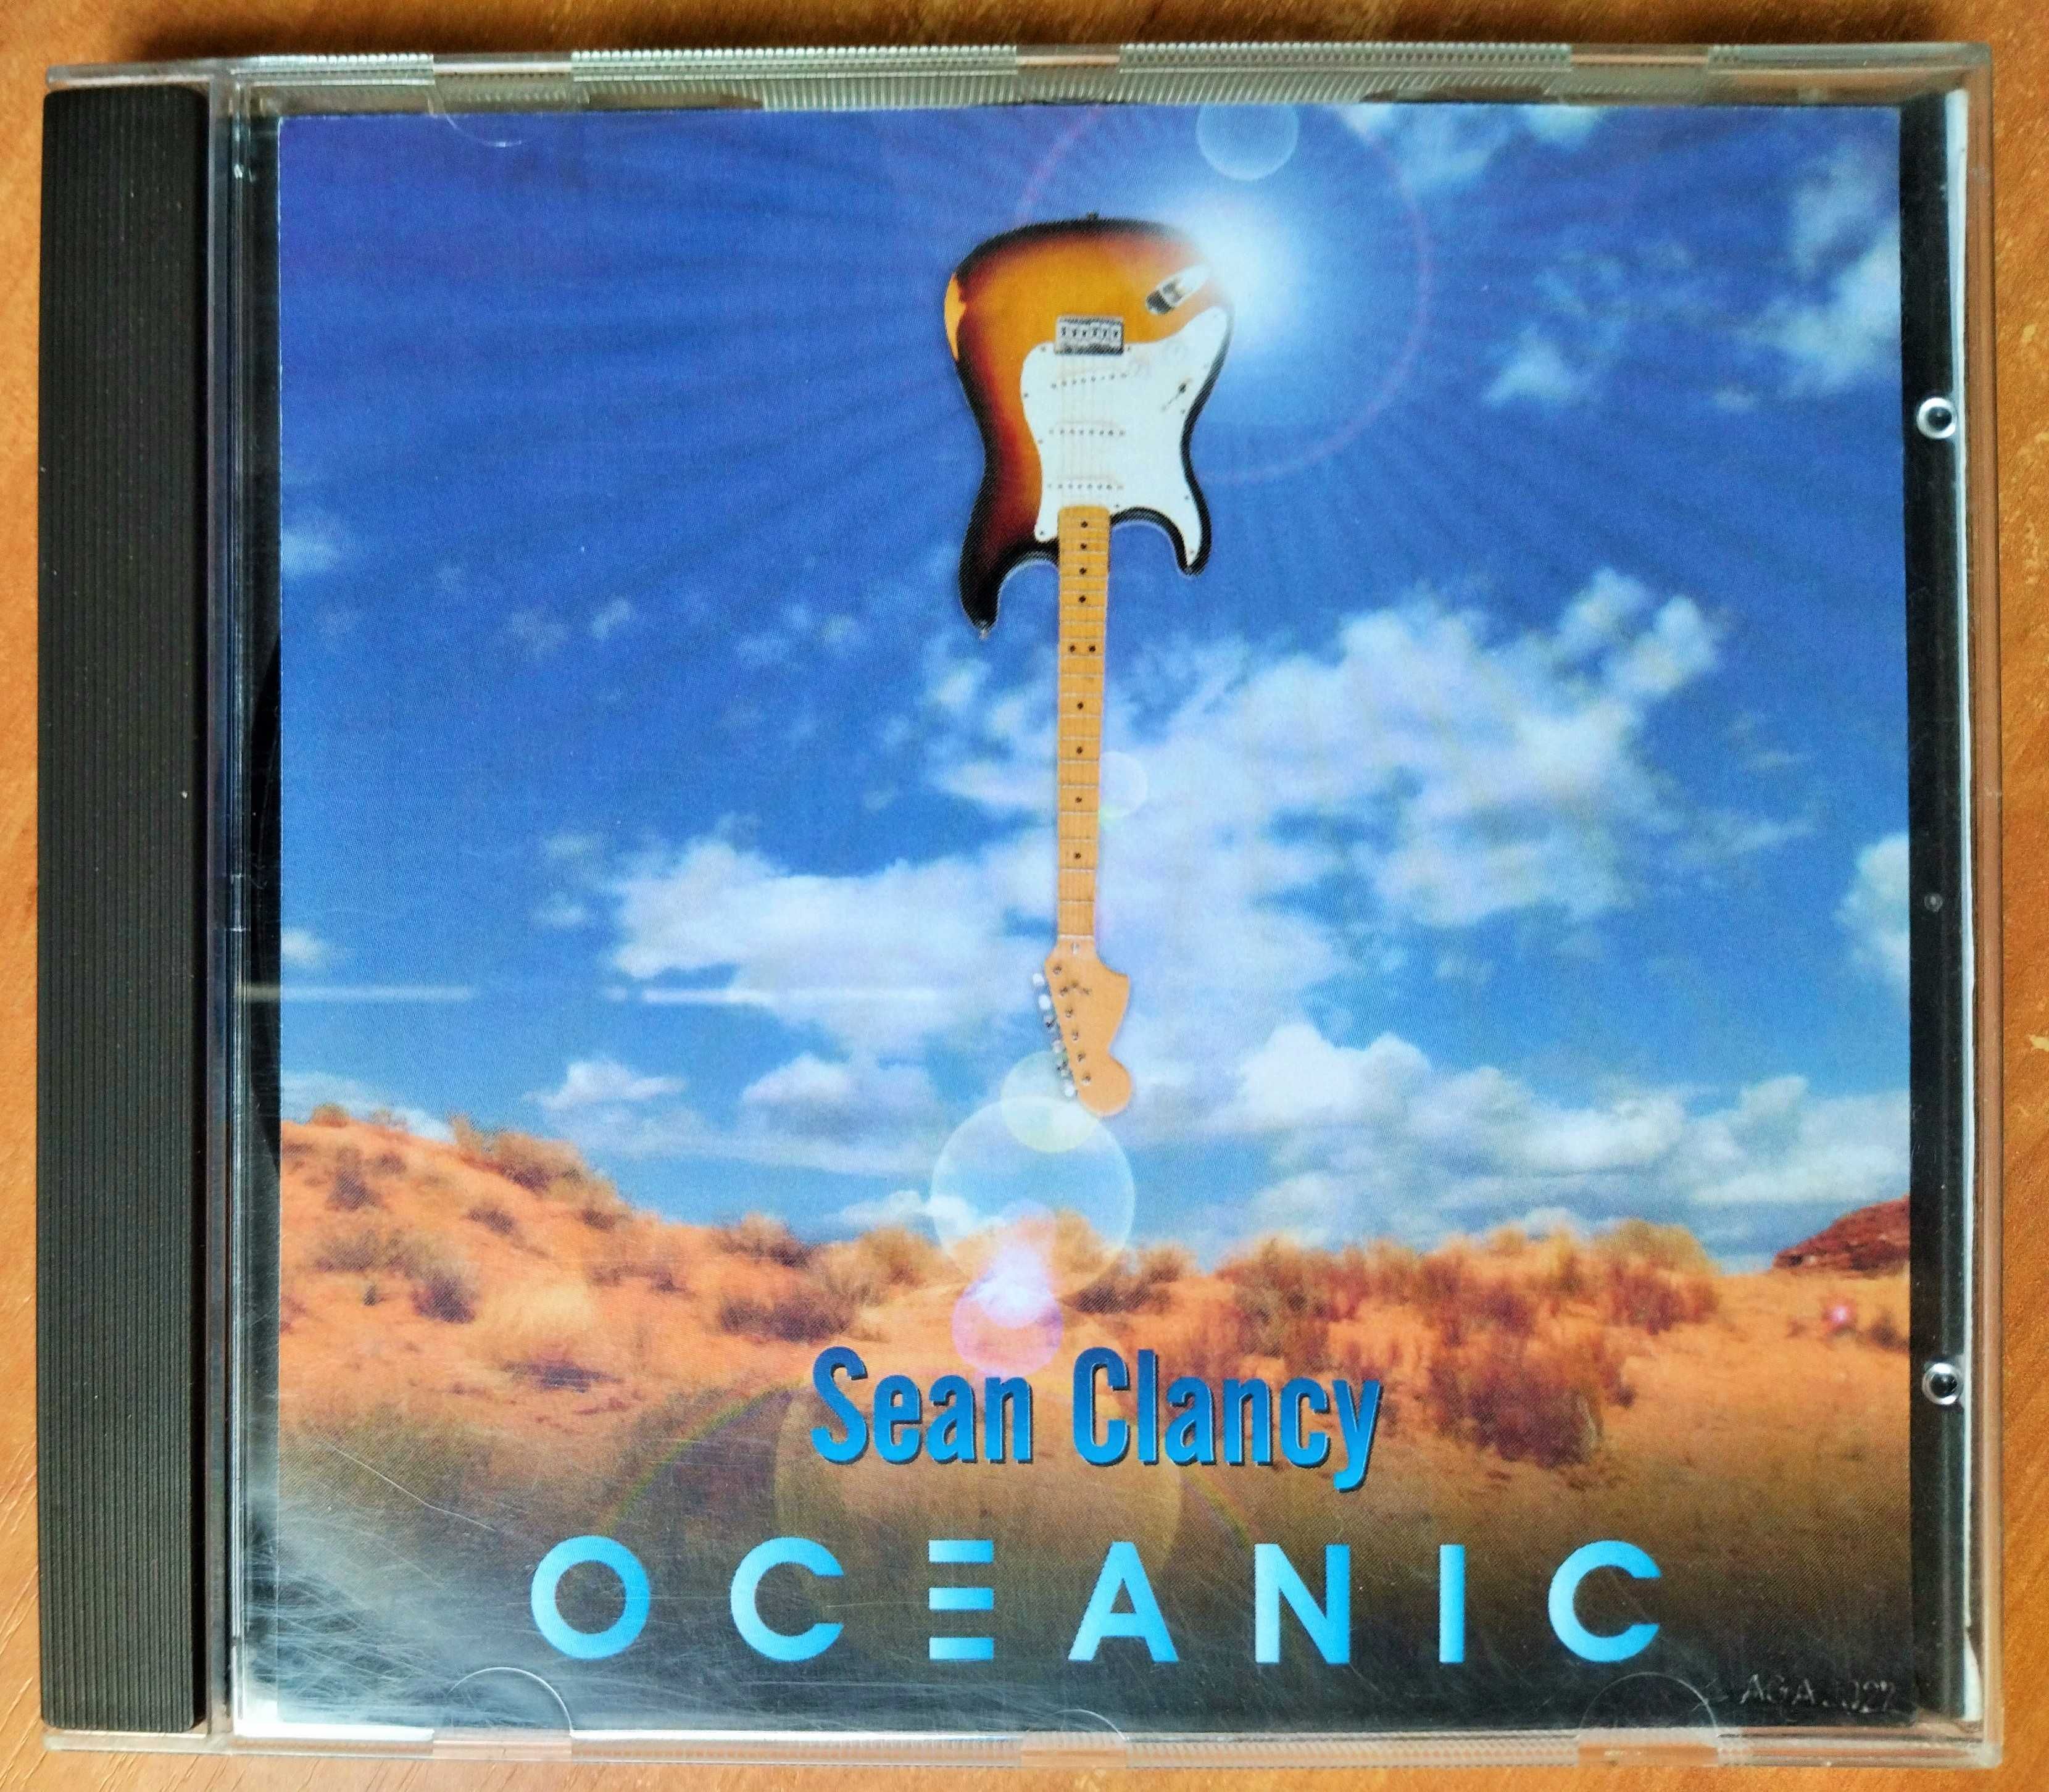 Sean Clancy Oceanic CD